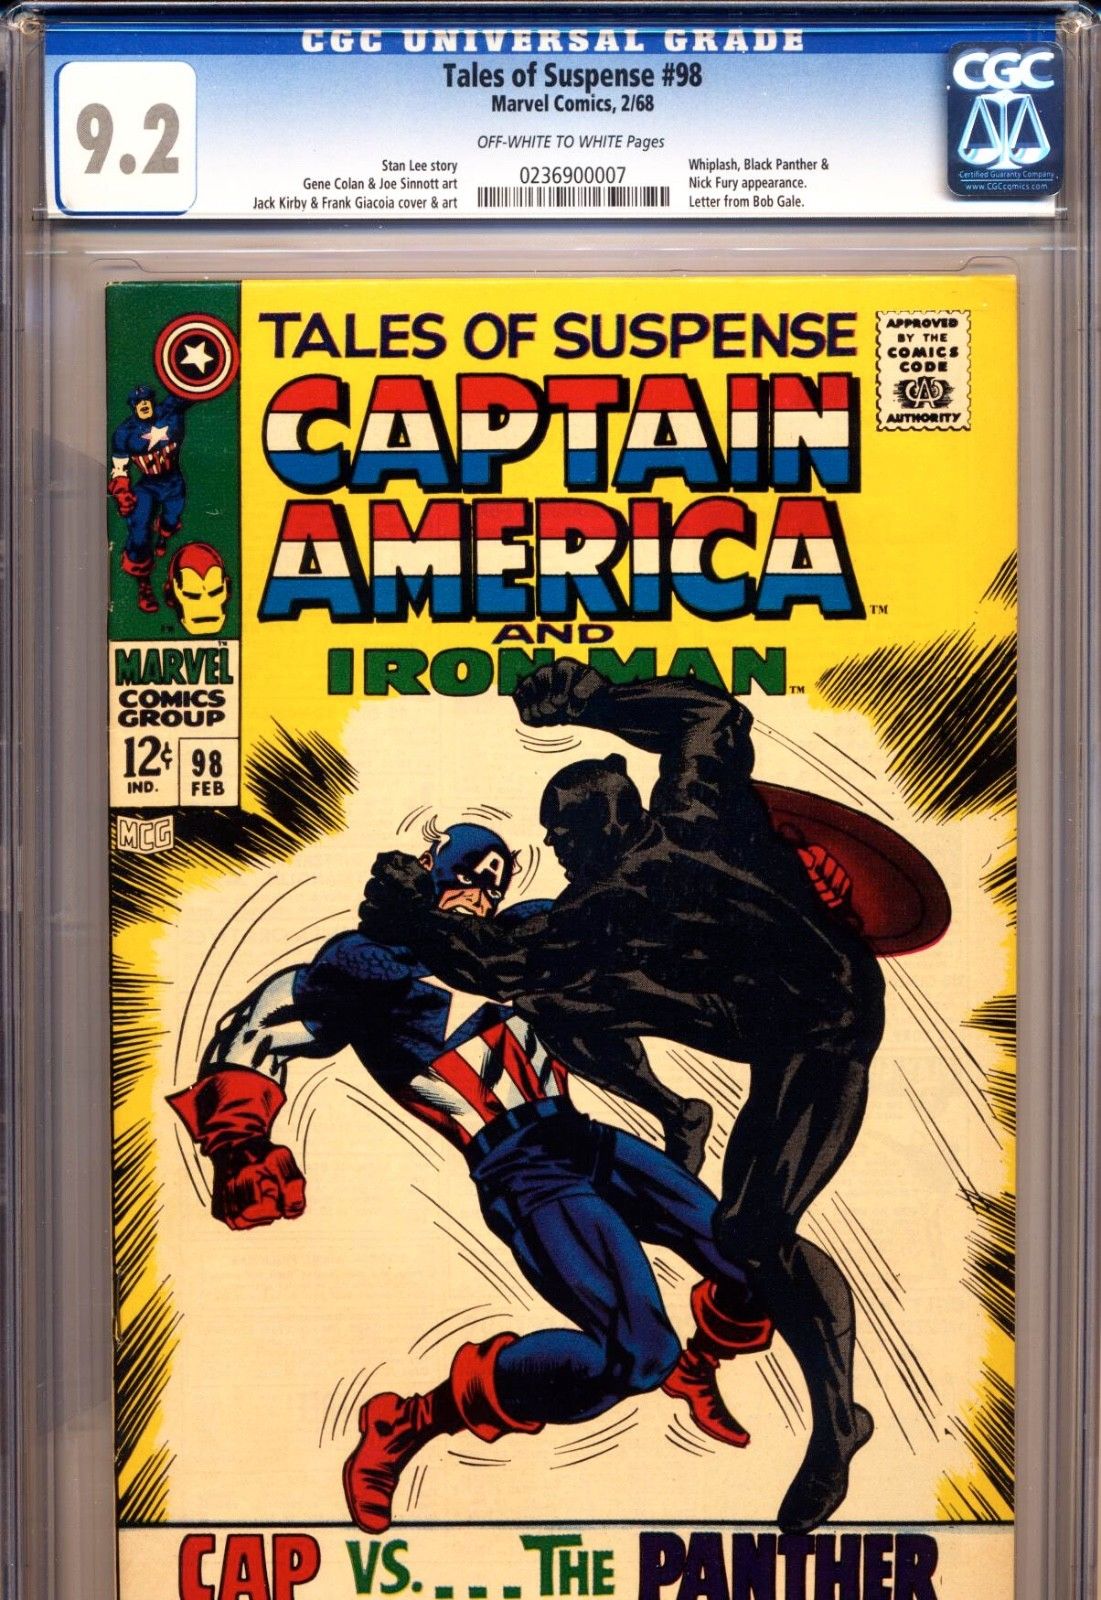 TALES OF SUSPENSE #98 CGC 9.2, Black Panther X-over, Marvel Comics 1968